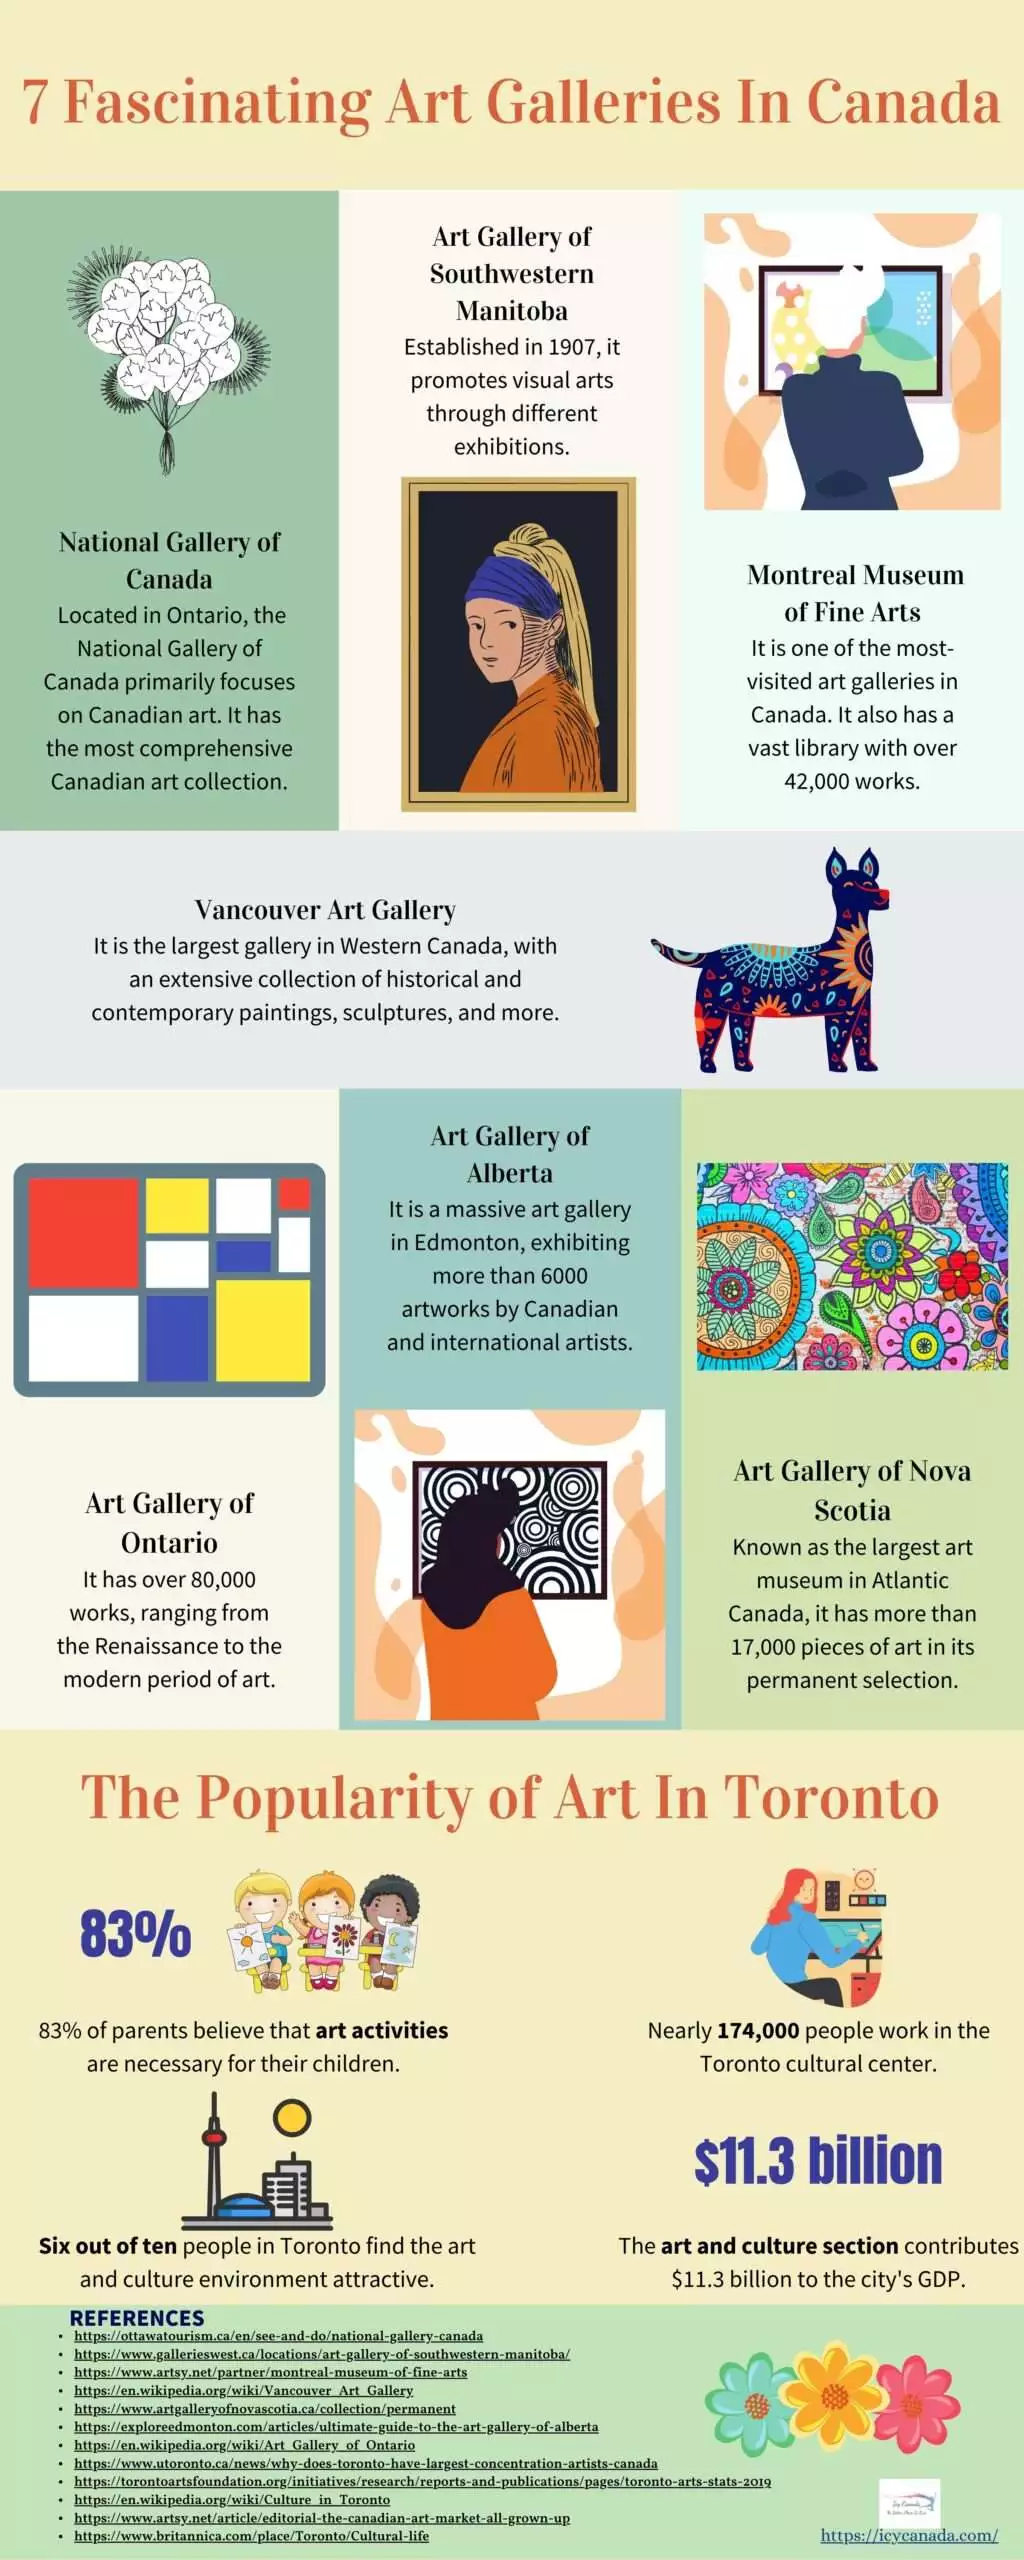 7 Fascinating Art Galleries In Canada